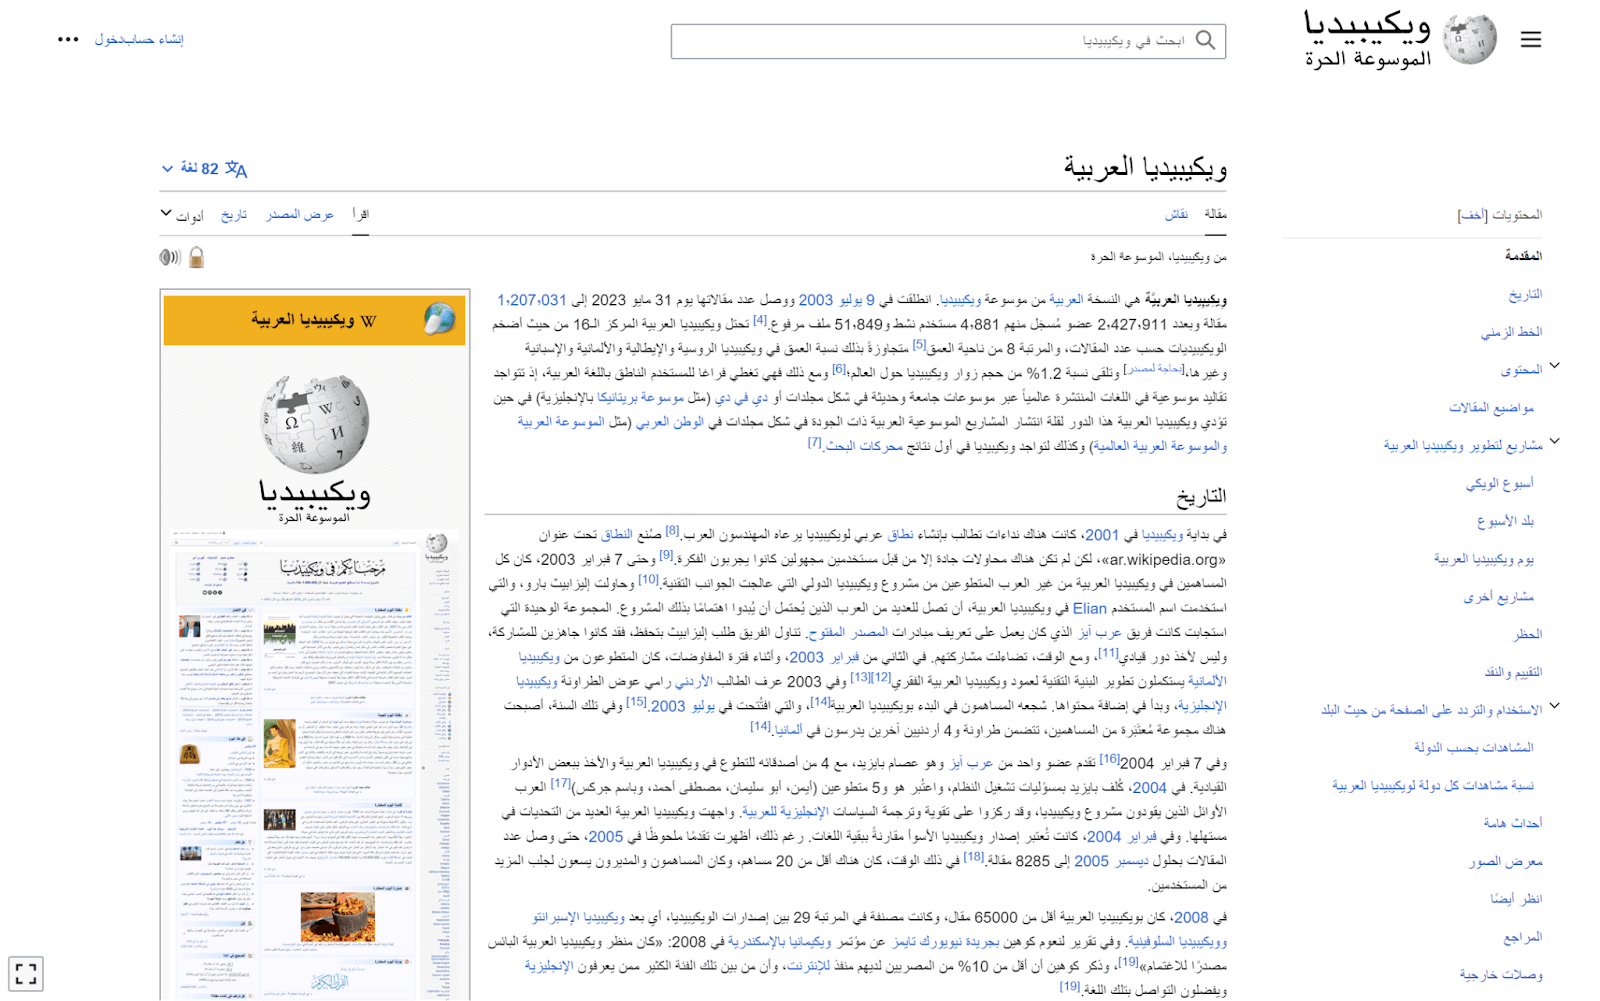 version is Wikipedia Arabic